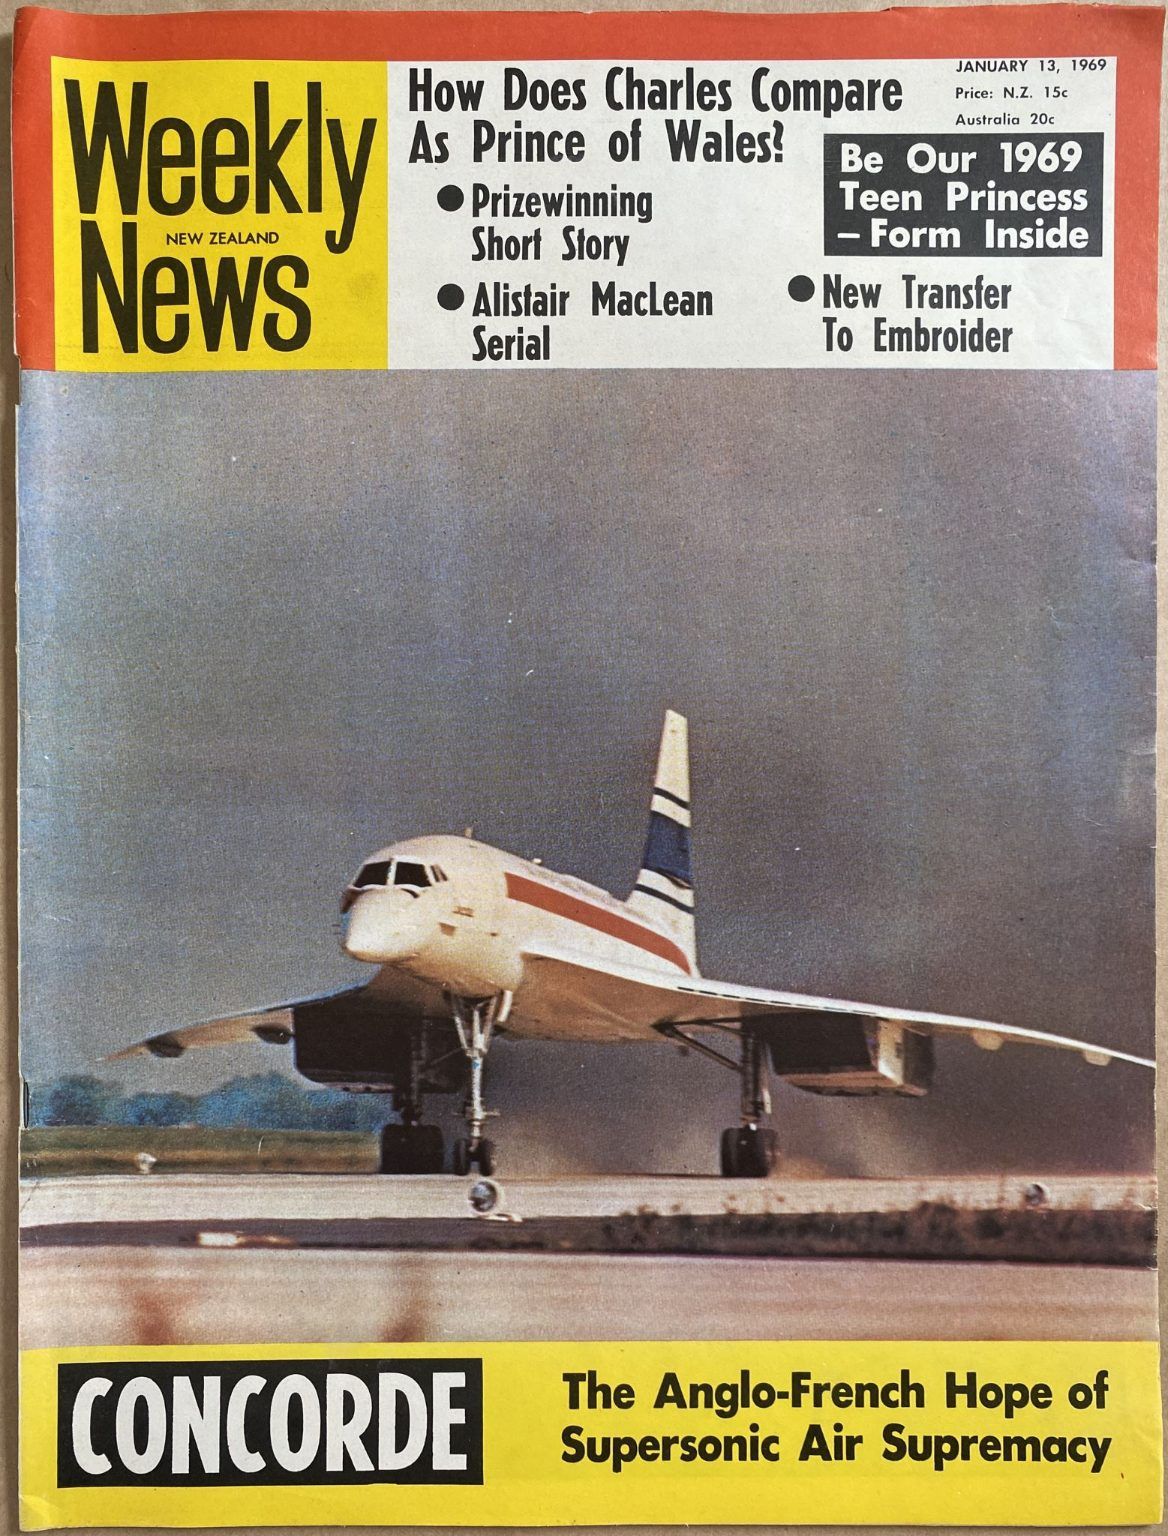 OLD NEWSPAPER: New Zealand Weekly News, 13 January 1969